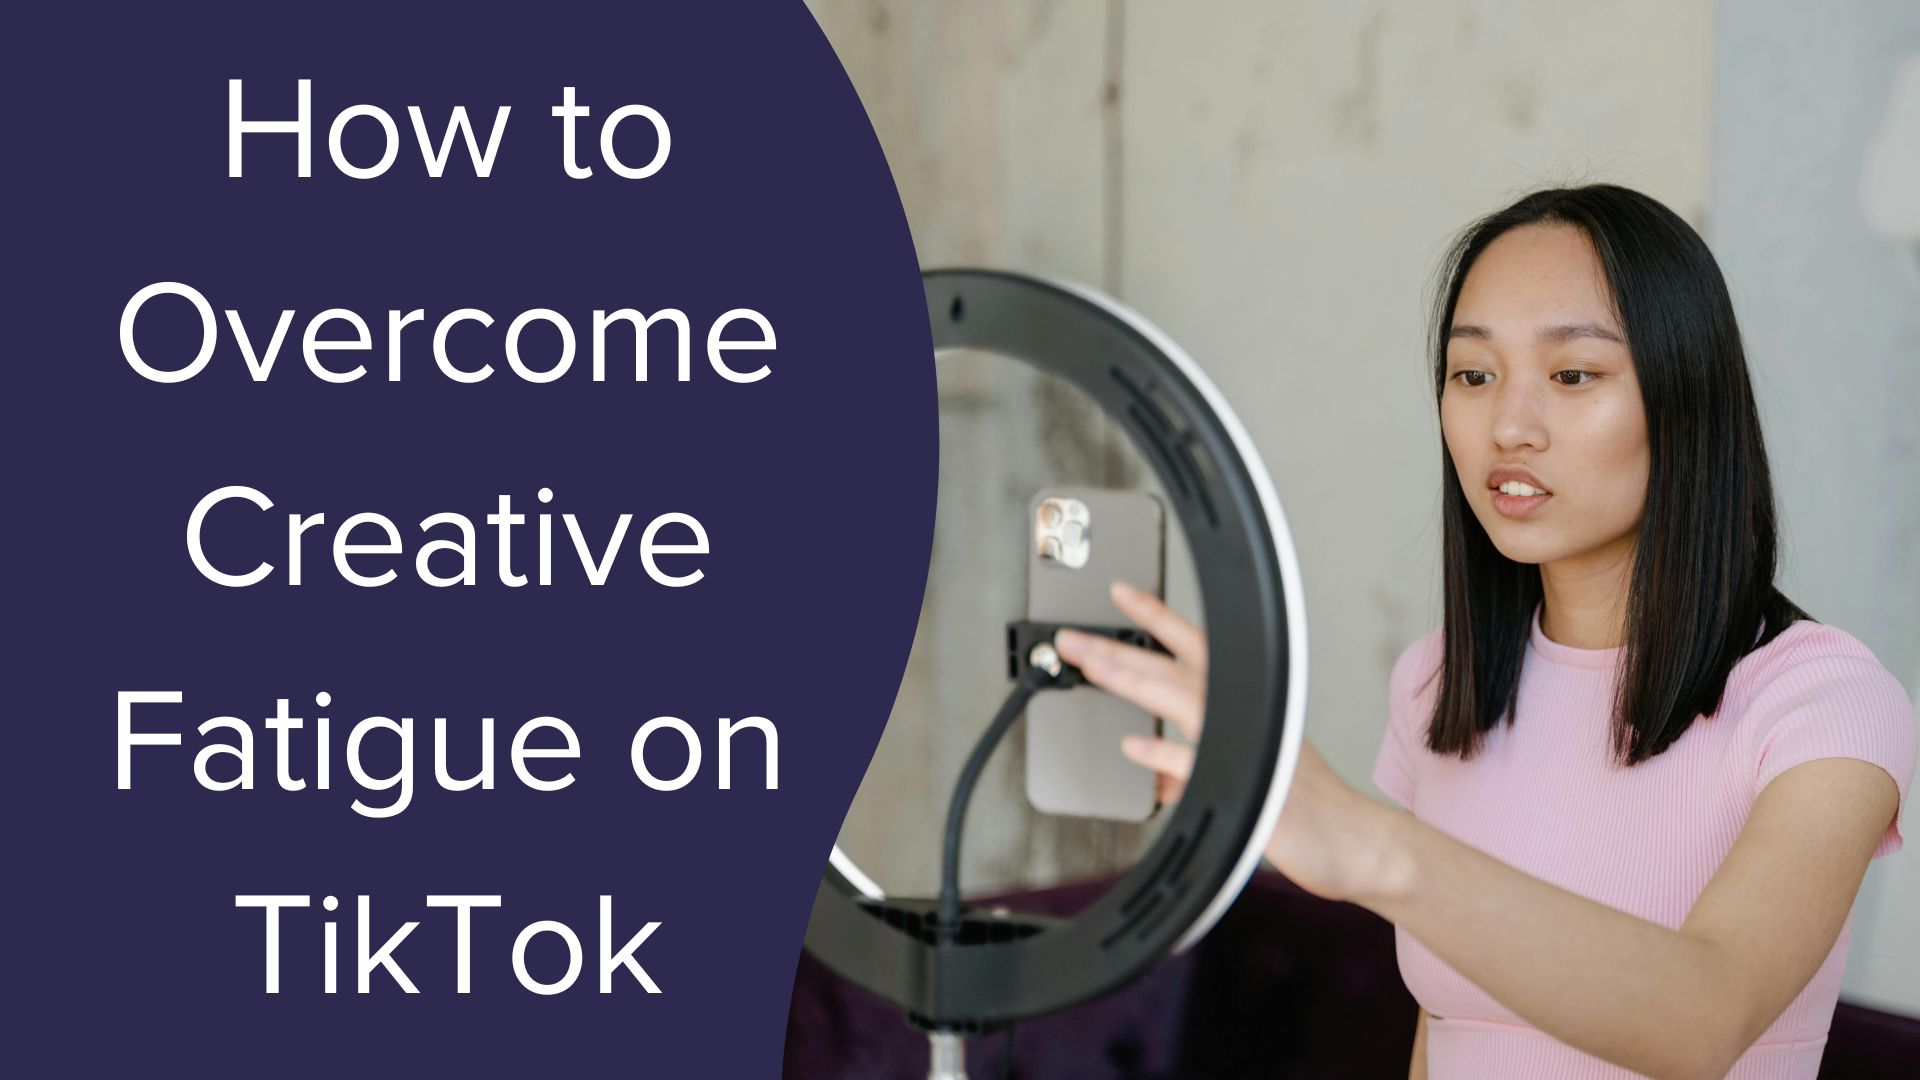 How to Overcome Creative Fatigue on TikTok